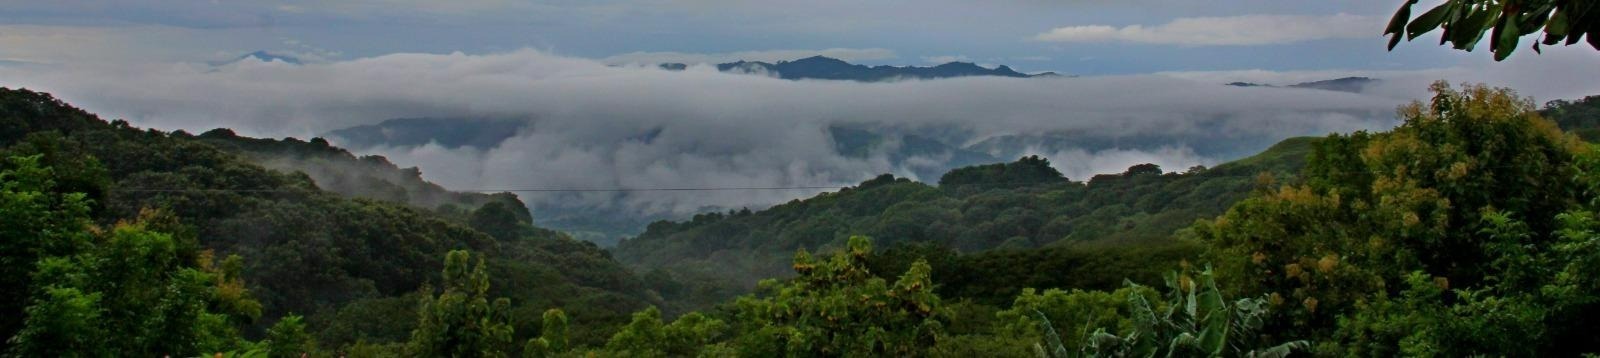 Cloud valley Costa Rica